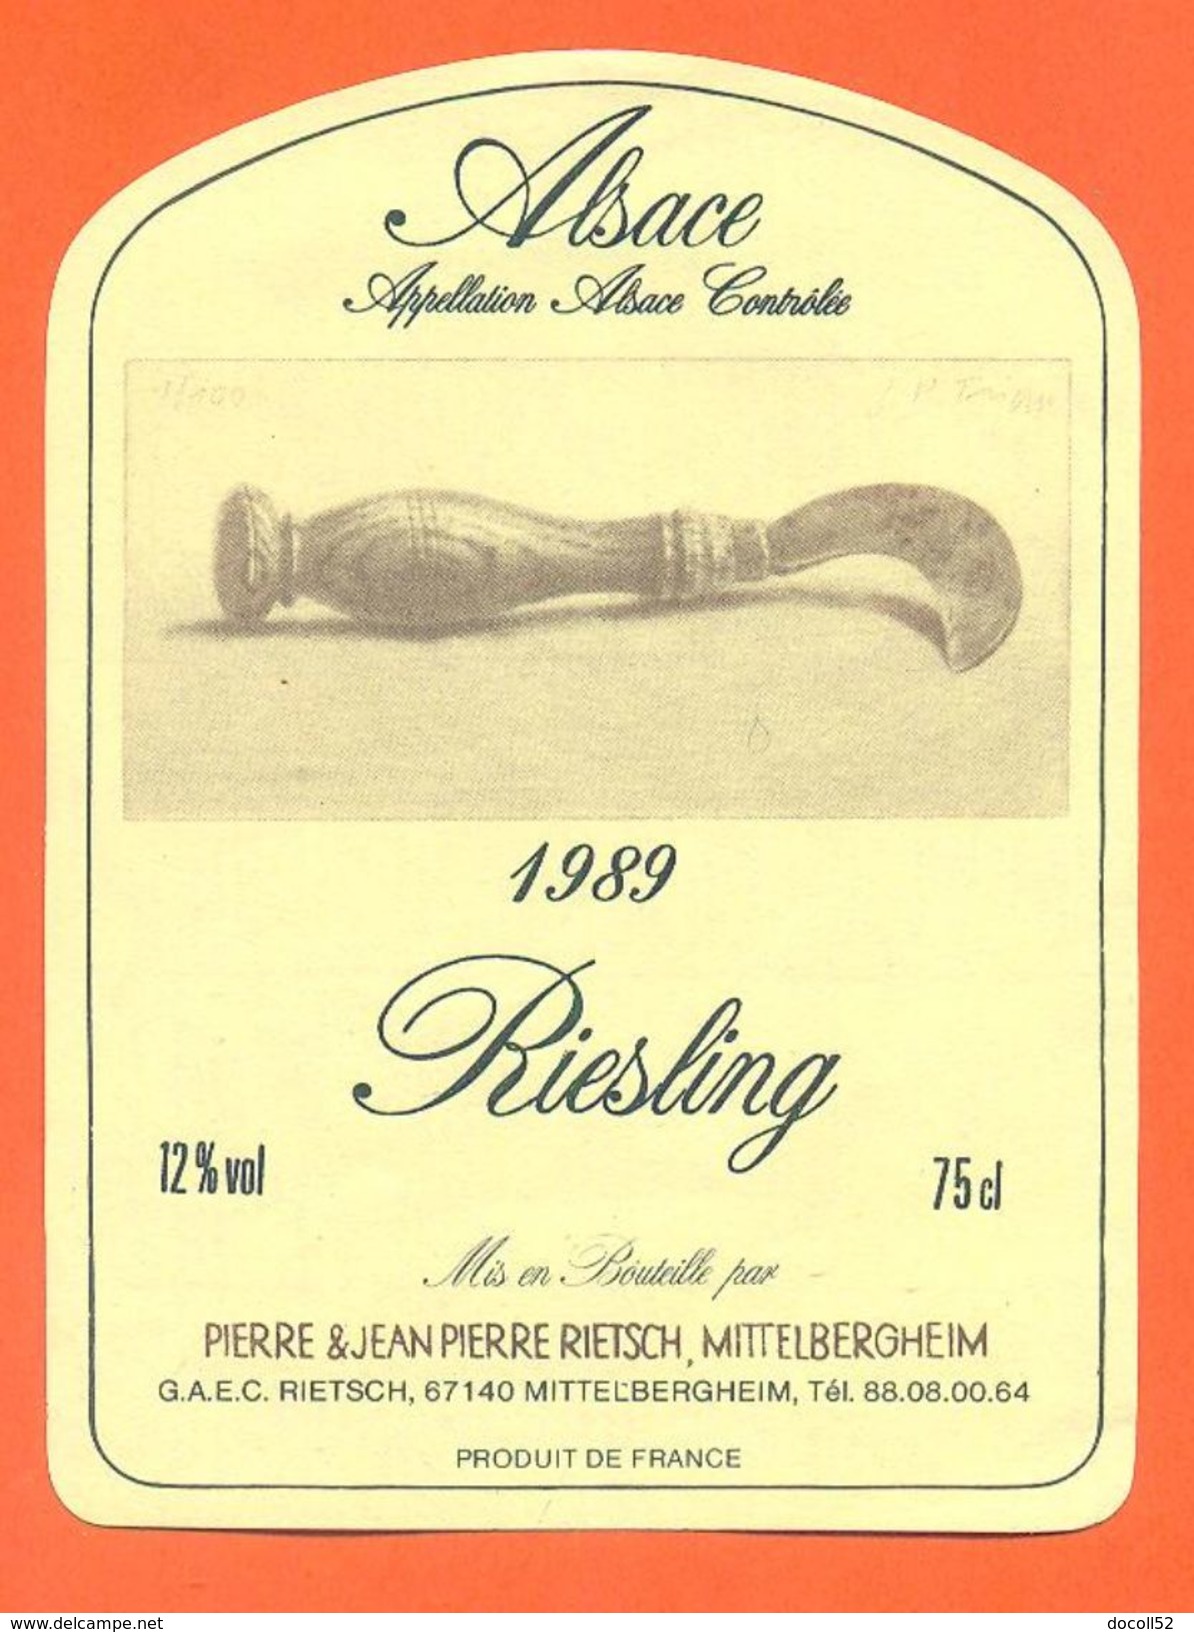 Etiquette Vin D'alsace Riesling 1989 Pierre Rietsch à Mittelbergheim -75 Cl - Riesling